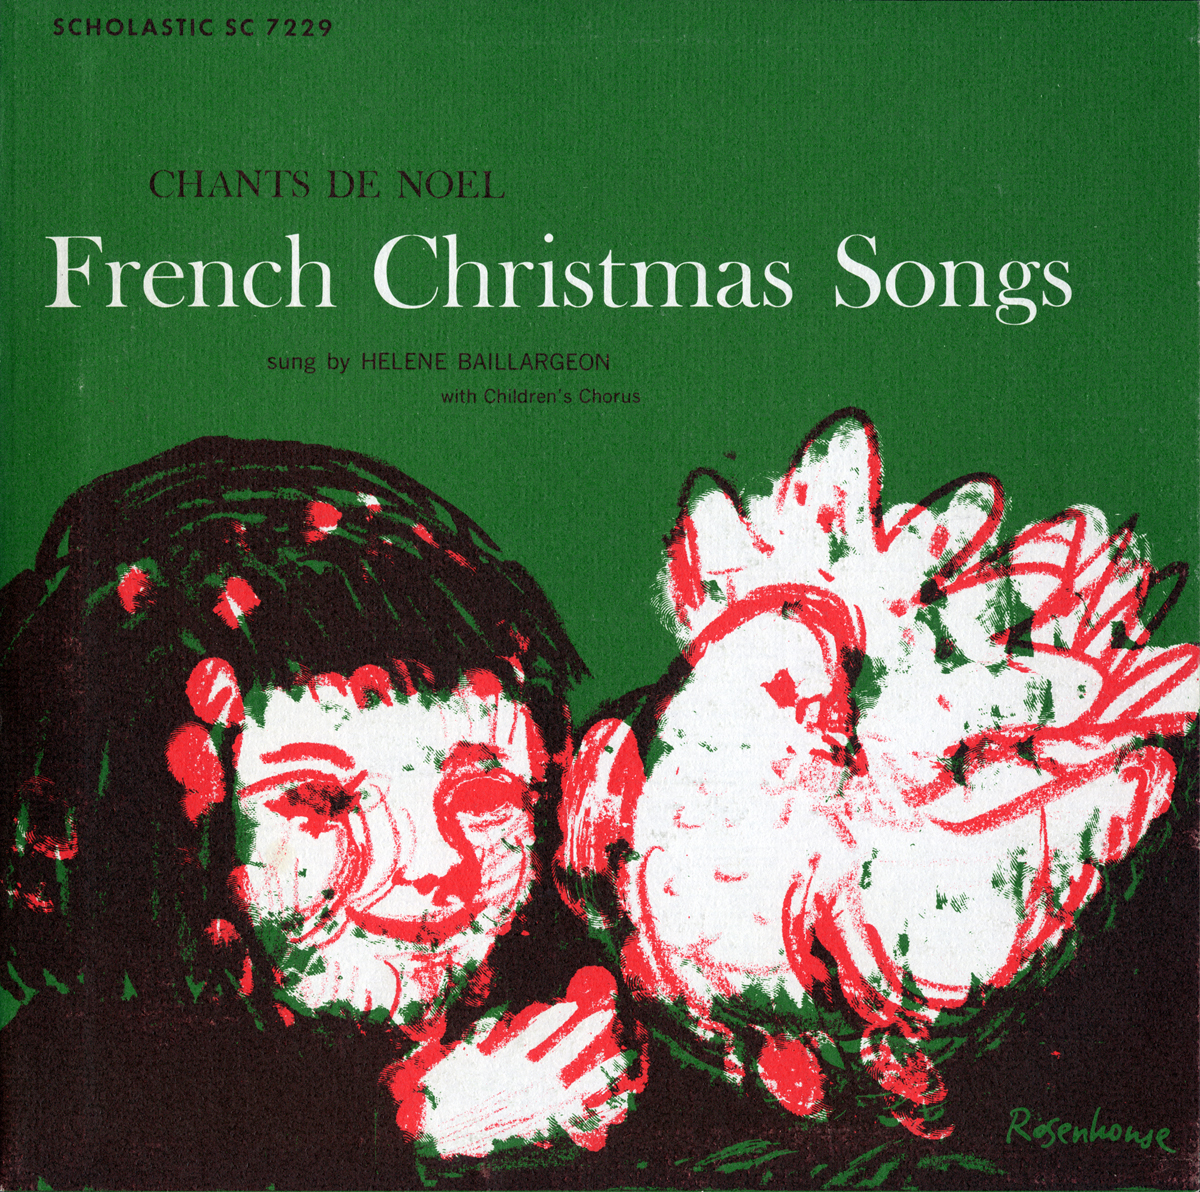 FRENCH CHRISTMAS SONGS: CHANTS DE NOEL